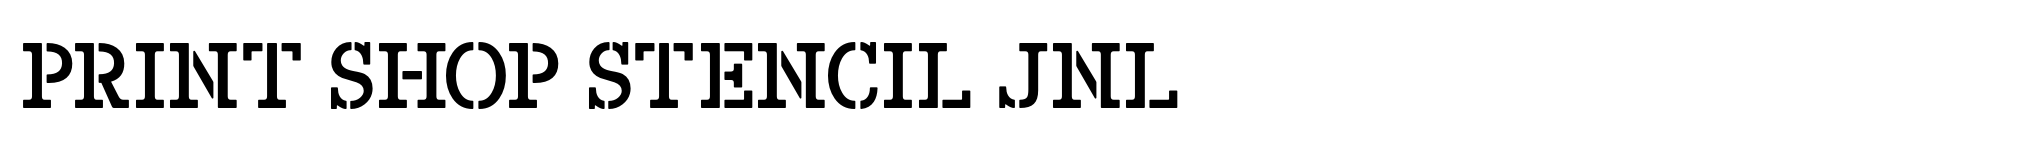 Print Shop Stencil JNL image